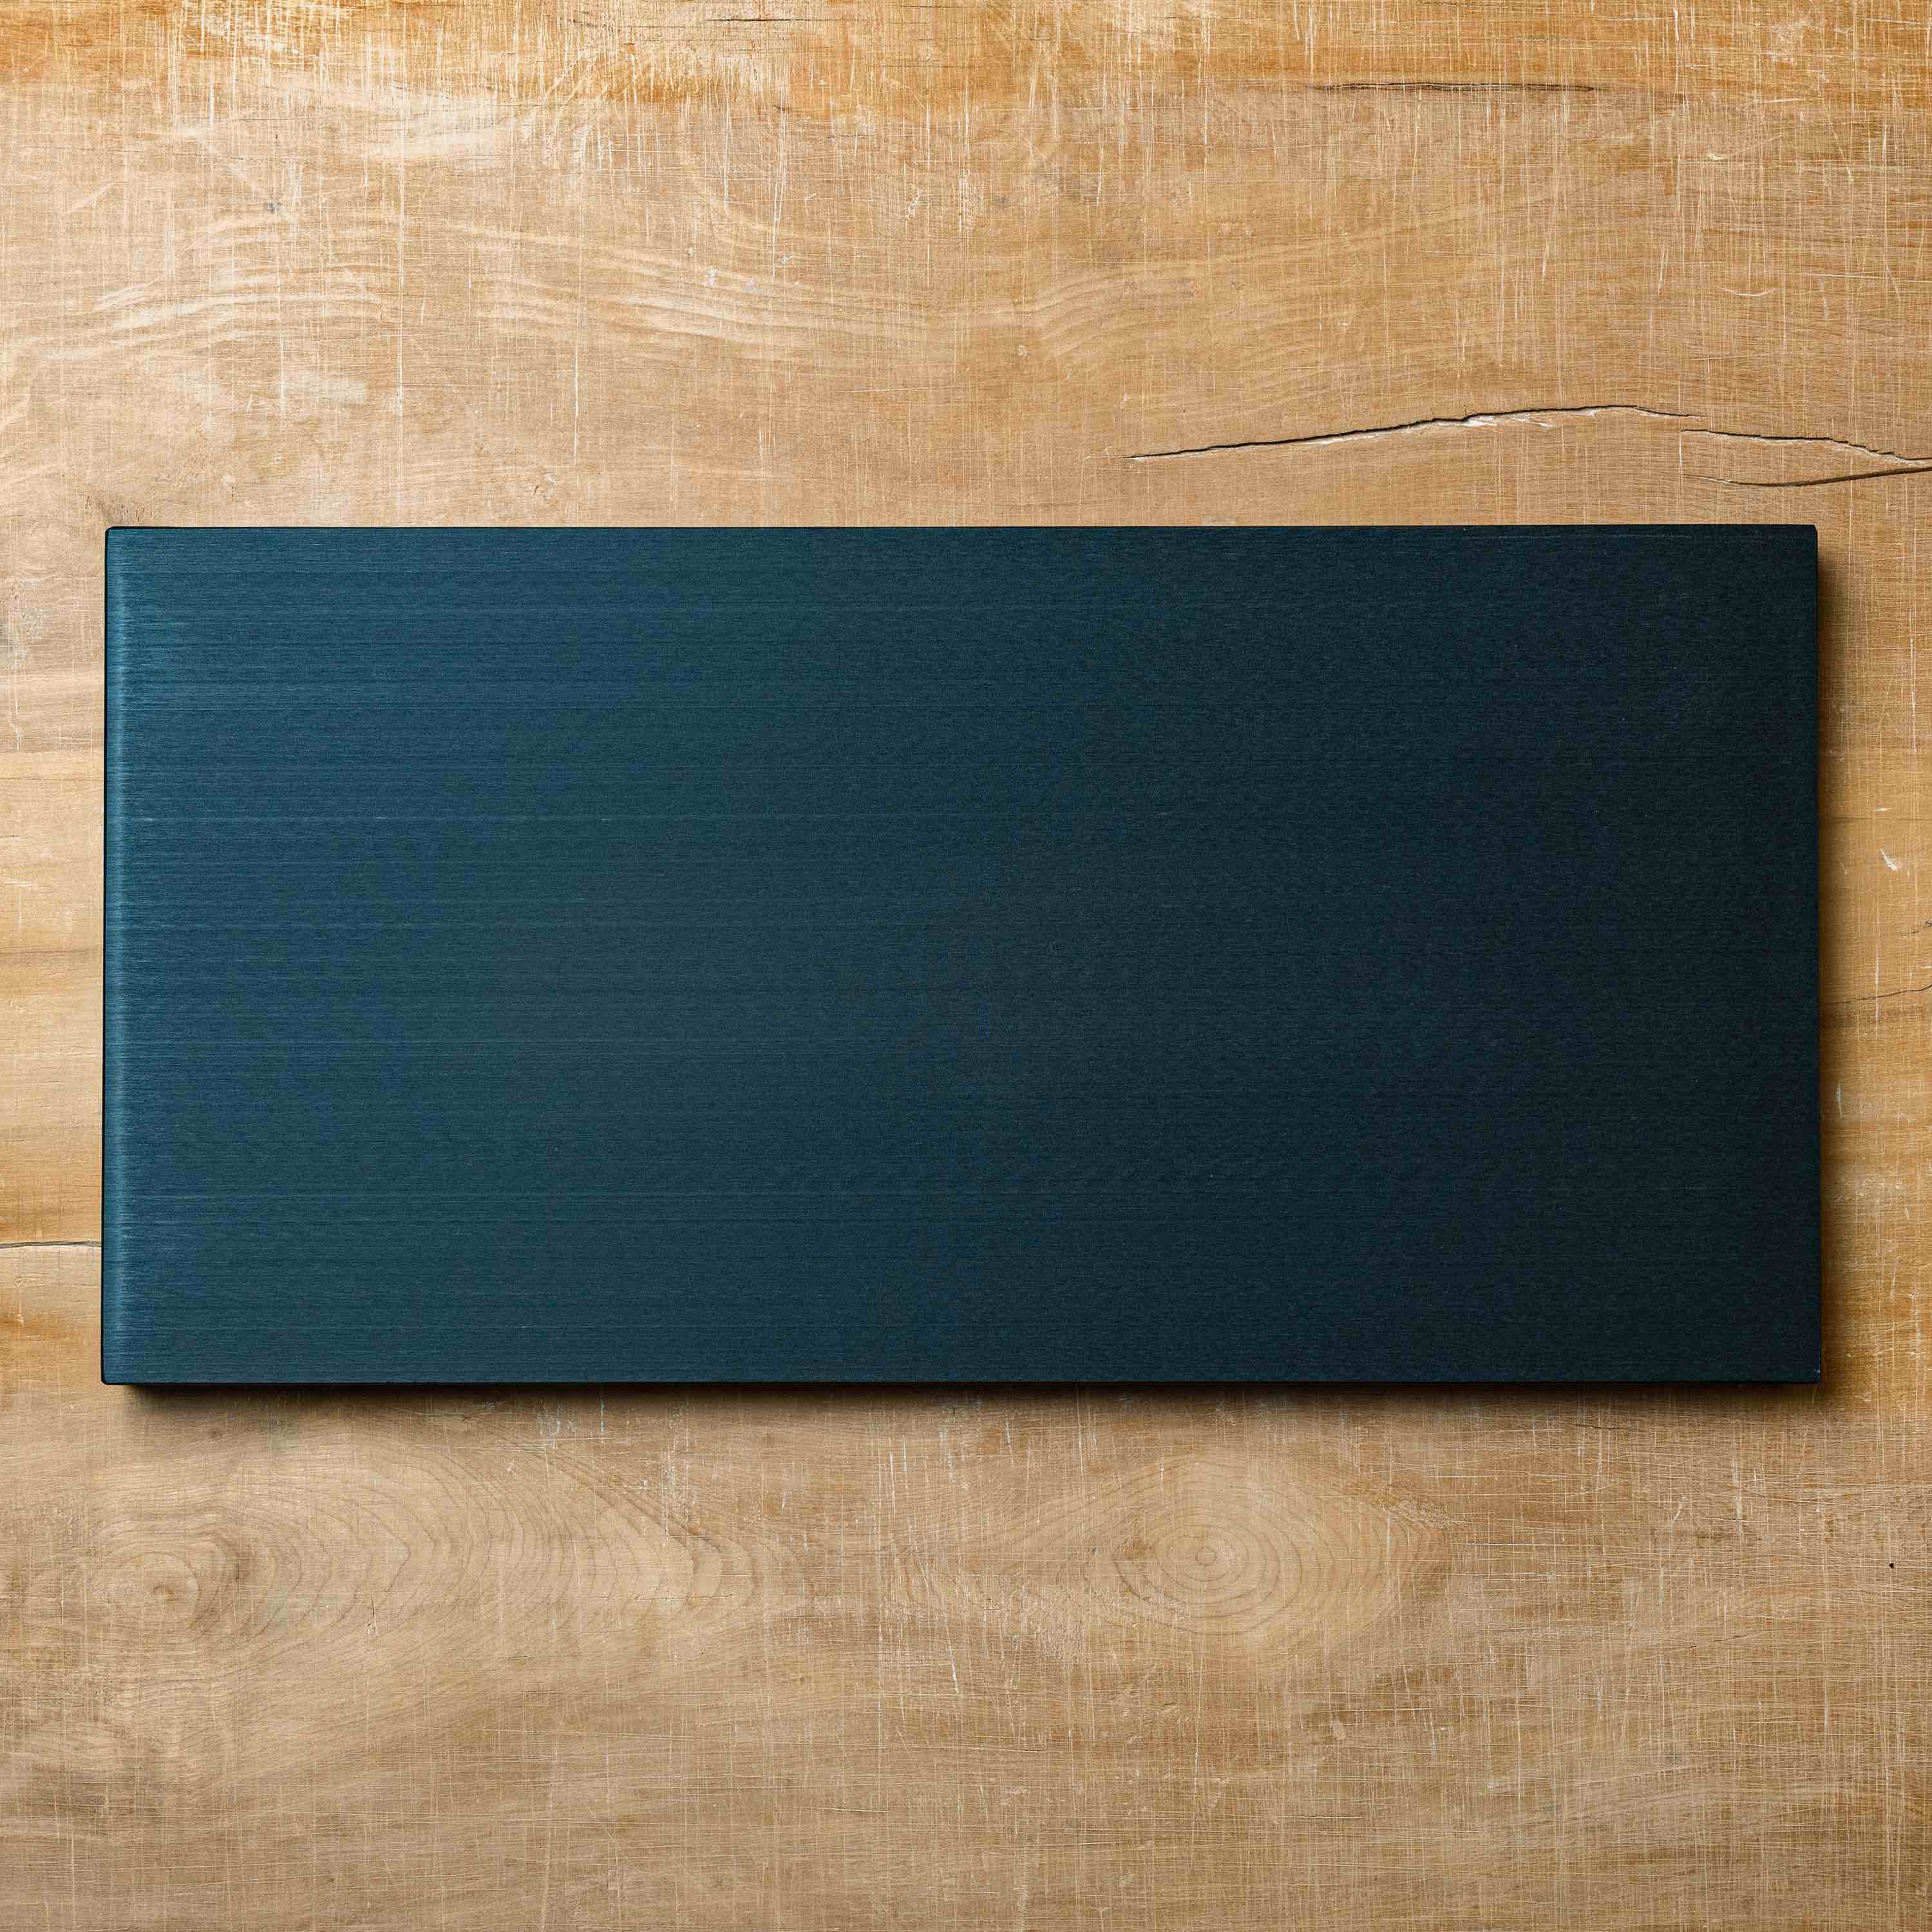 Tenryo Black Grainy High Contrast Cutting Board 39.4 x 15.75 x 0.75